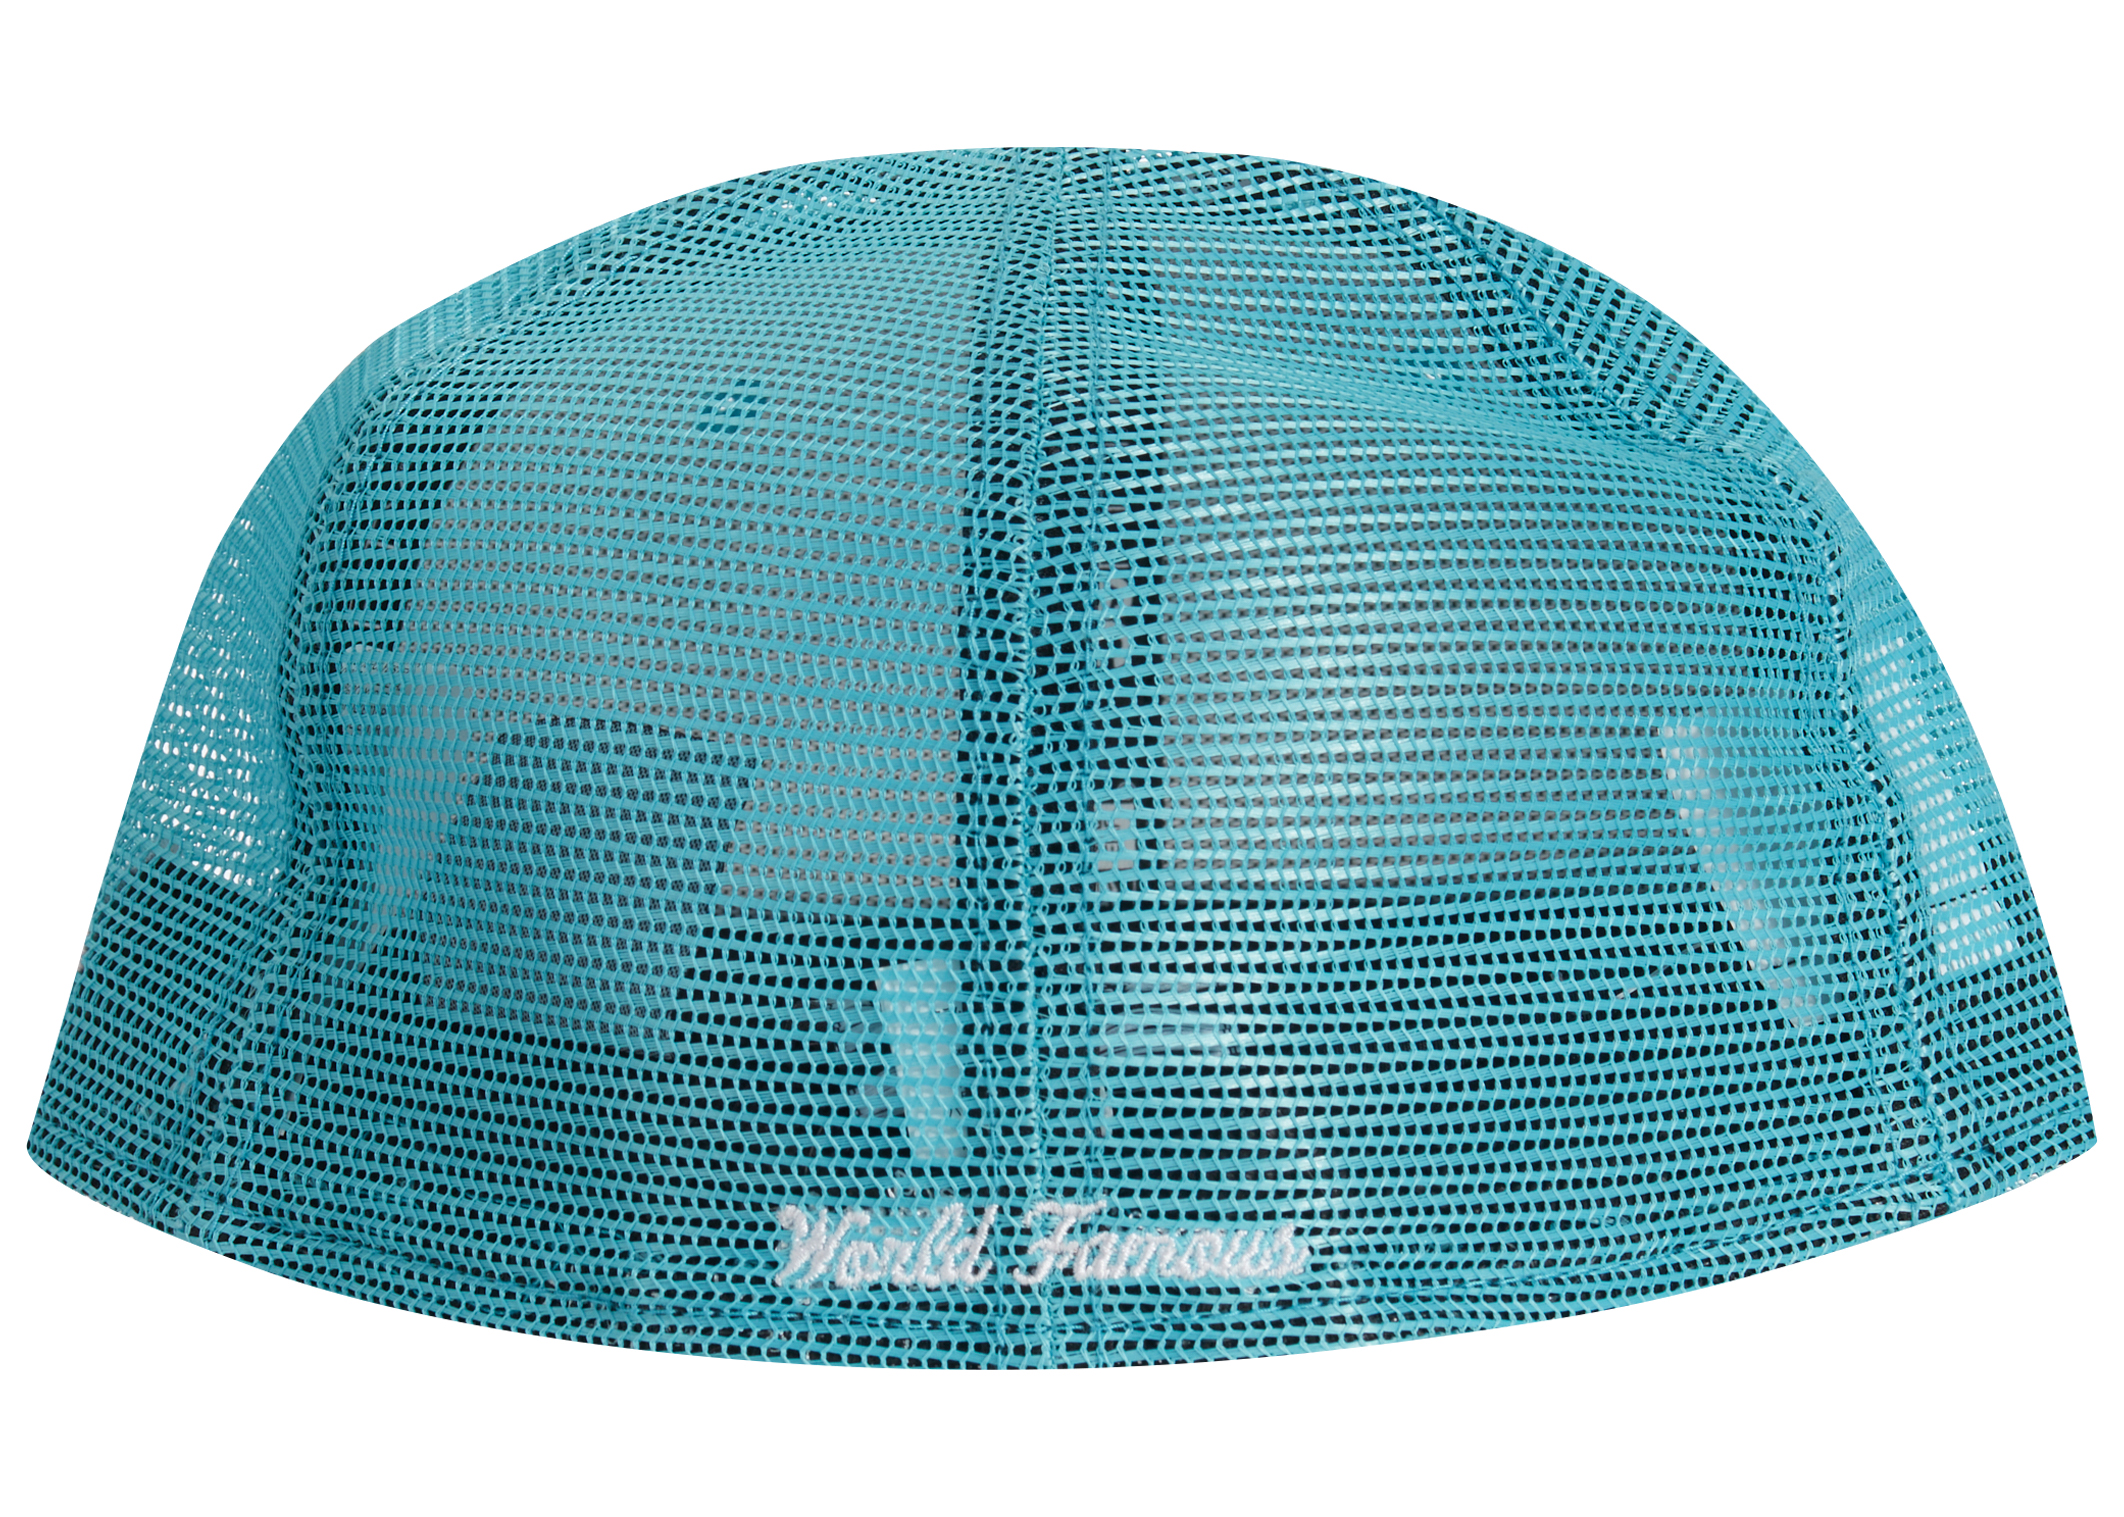 Supreme Box Logo Mesh Back New Era Hat (SS23) Blue - SS23 - US